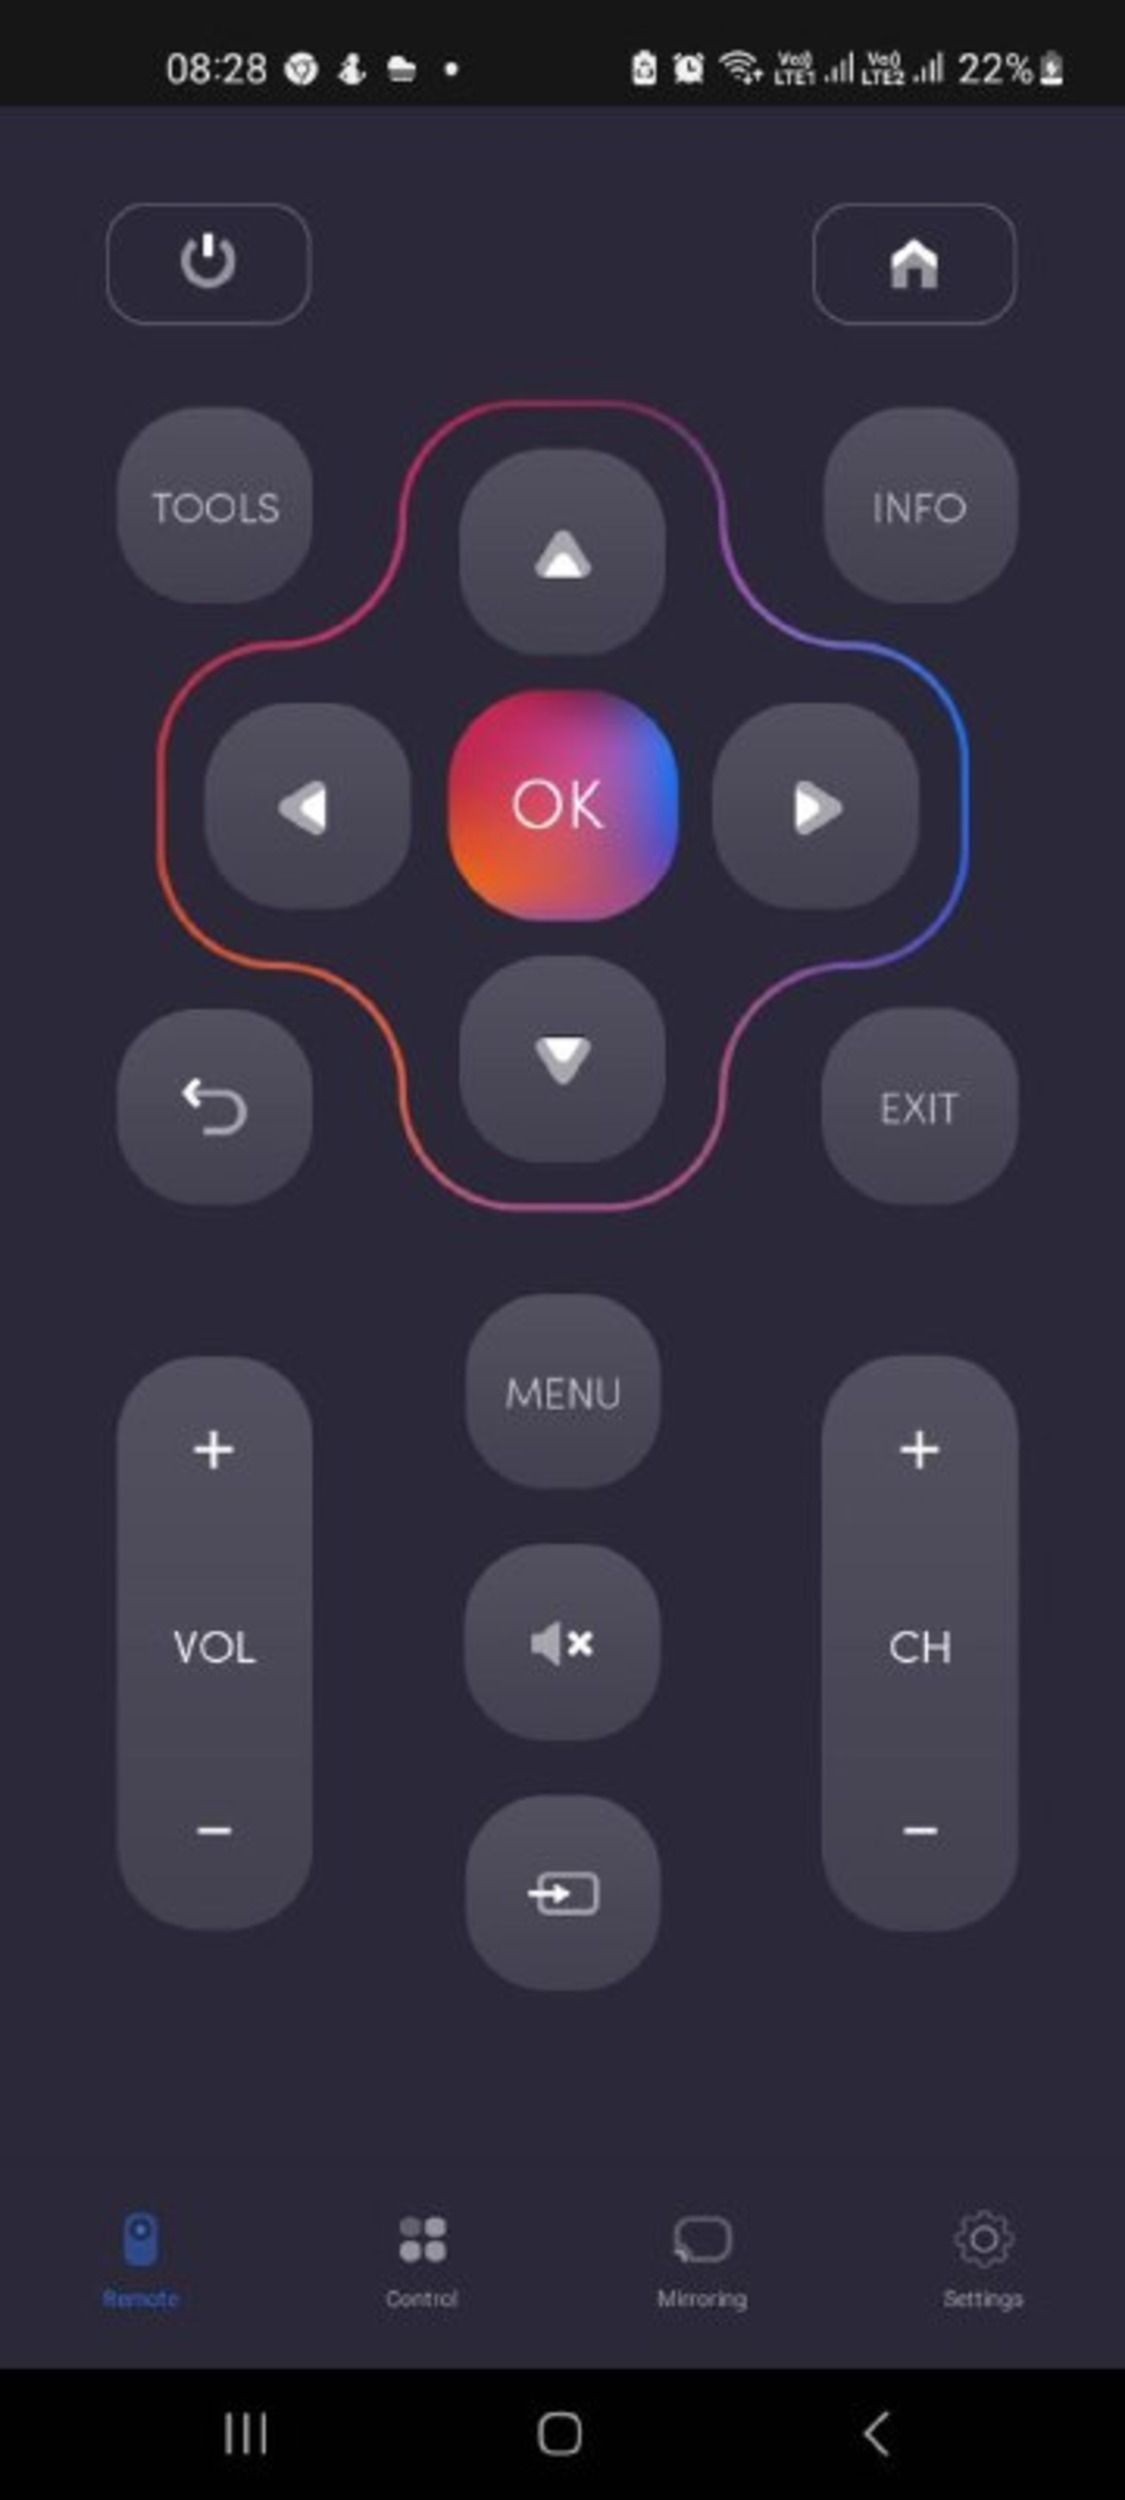 Controls on the Unimote remote app